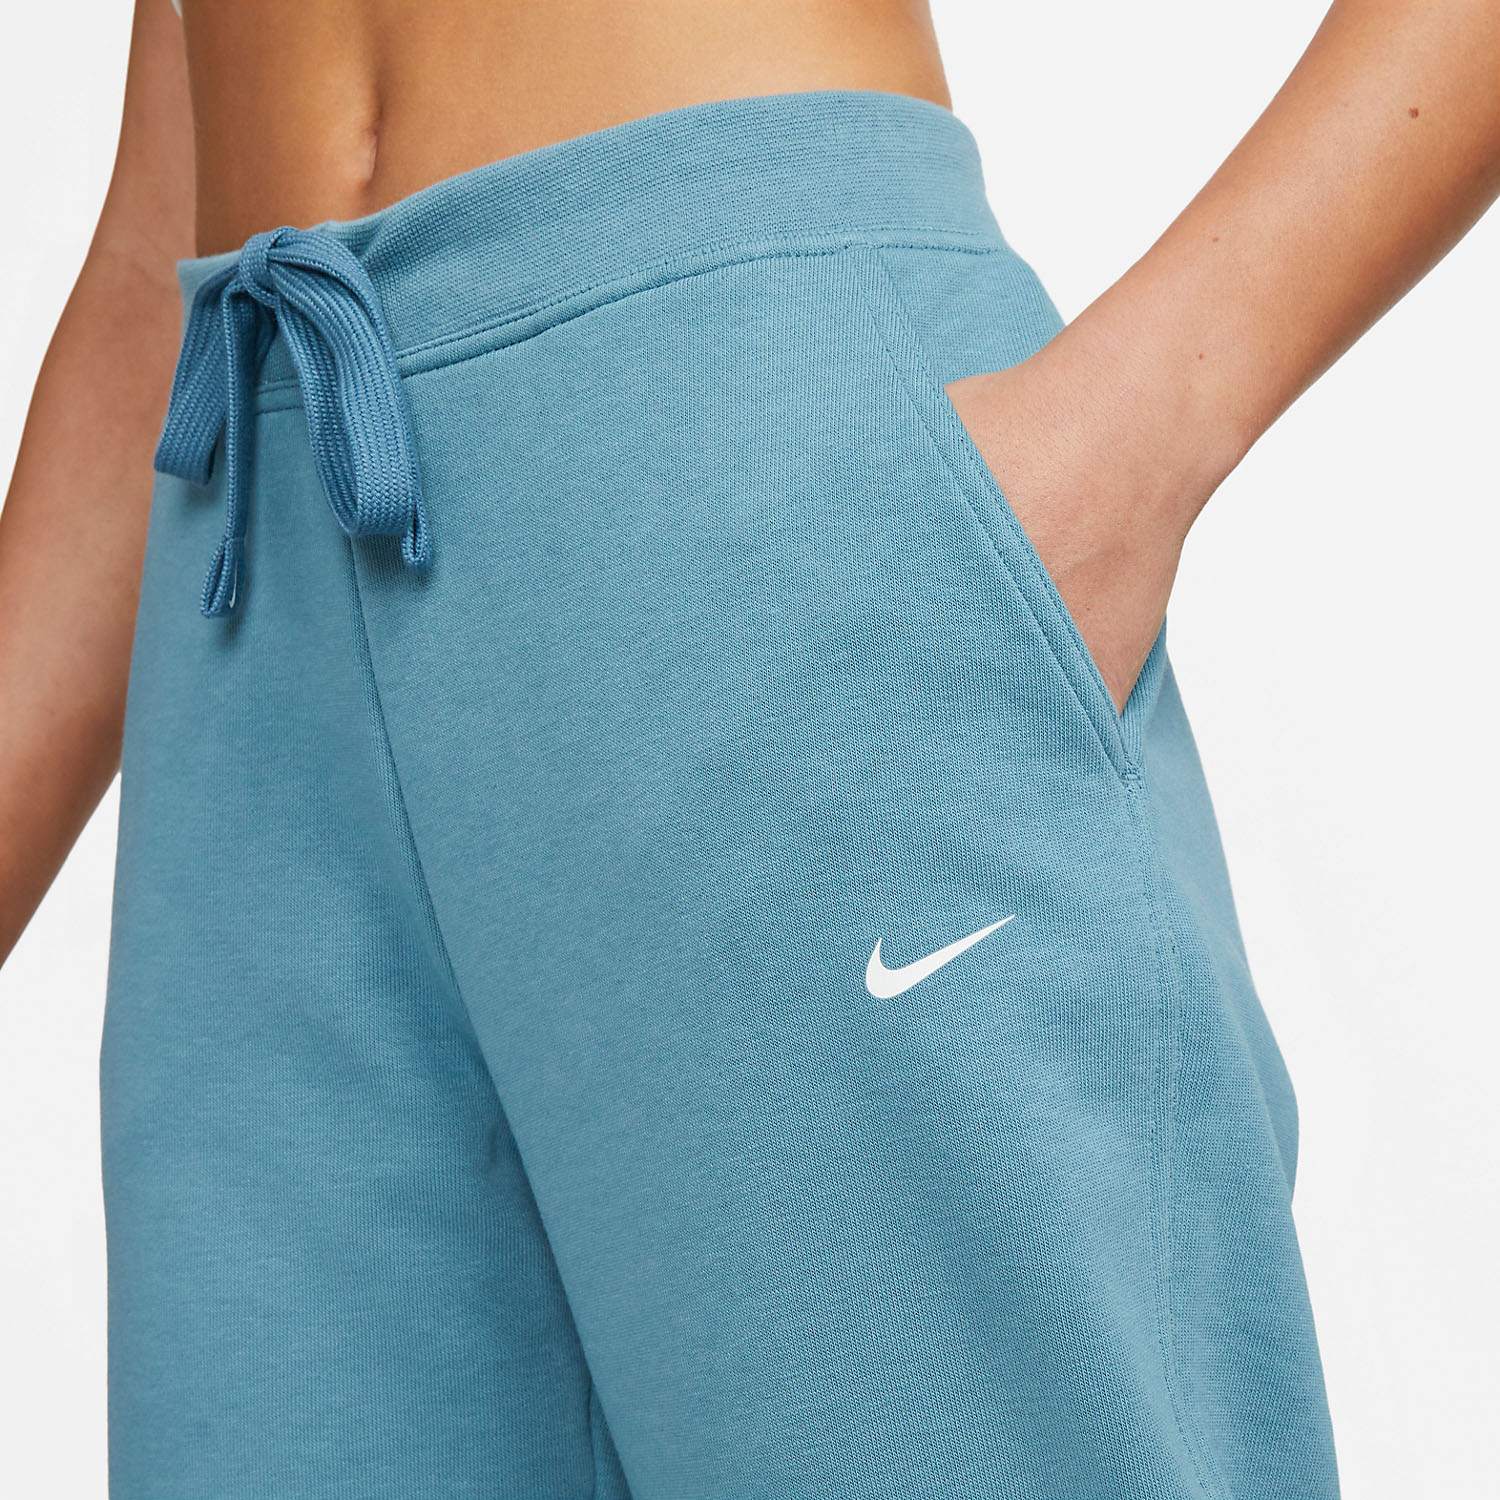 Nike Dri-FIT Get Fit Women's Tennis Pants - Noise Aqua/White